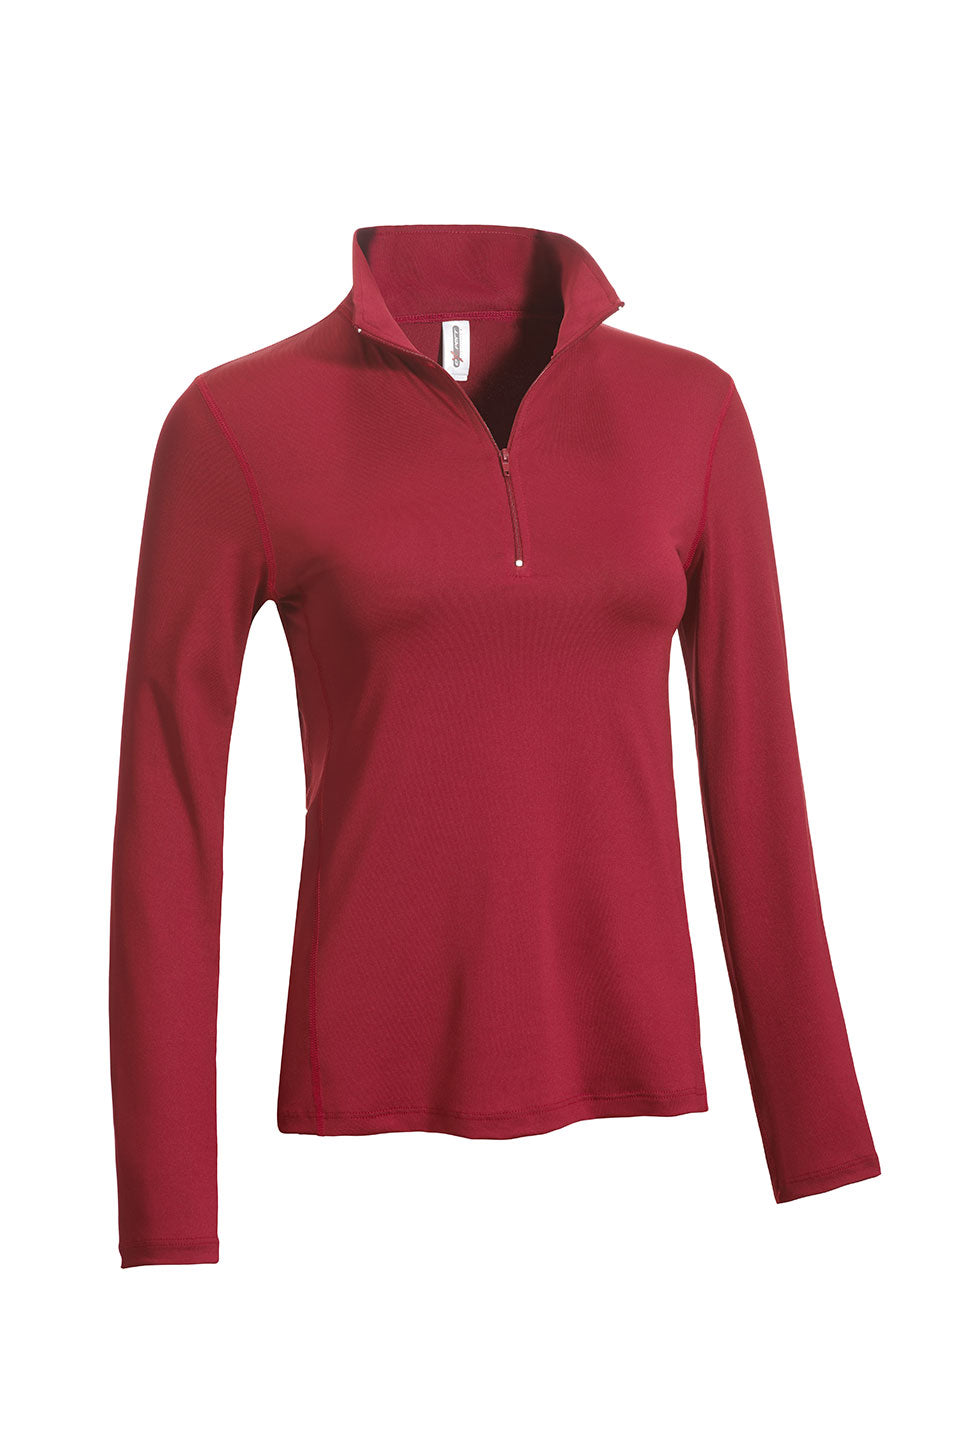 Expert Brand Wholesale Made in USA Women's Quarter Zip Tracksuit Pullover Top in Crimson#crimson